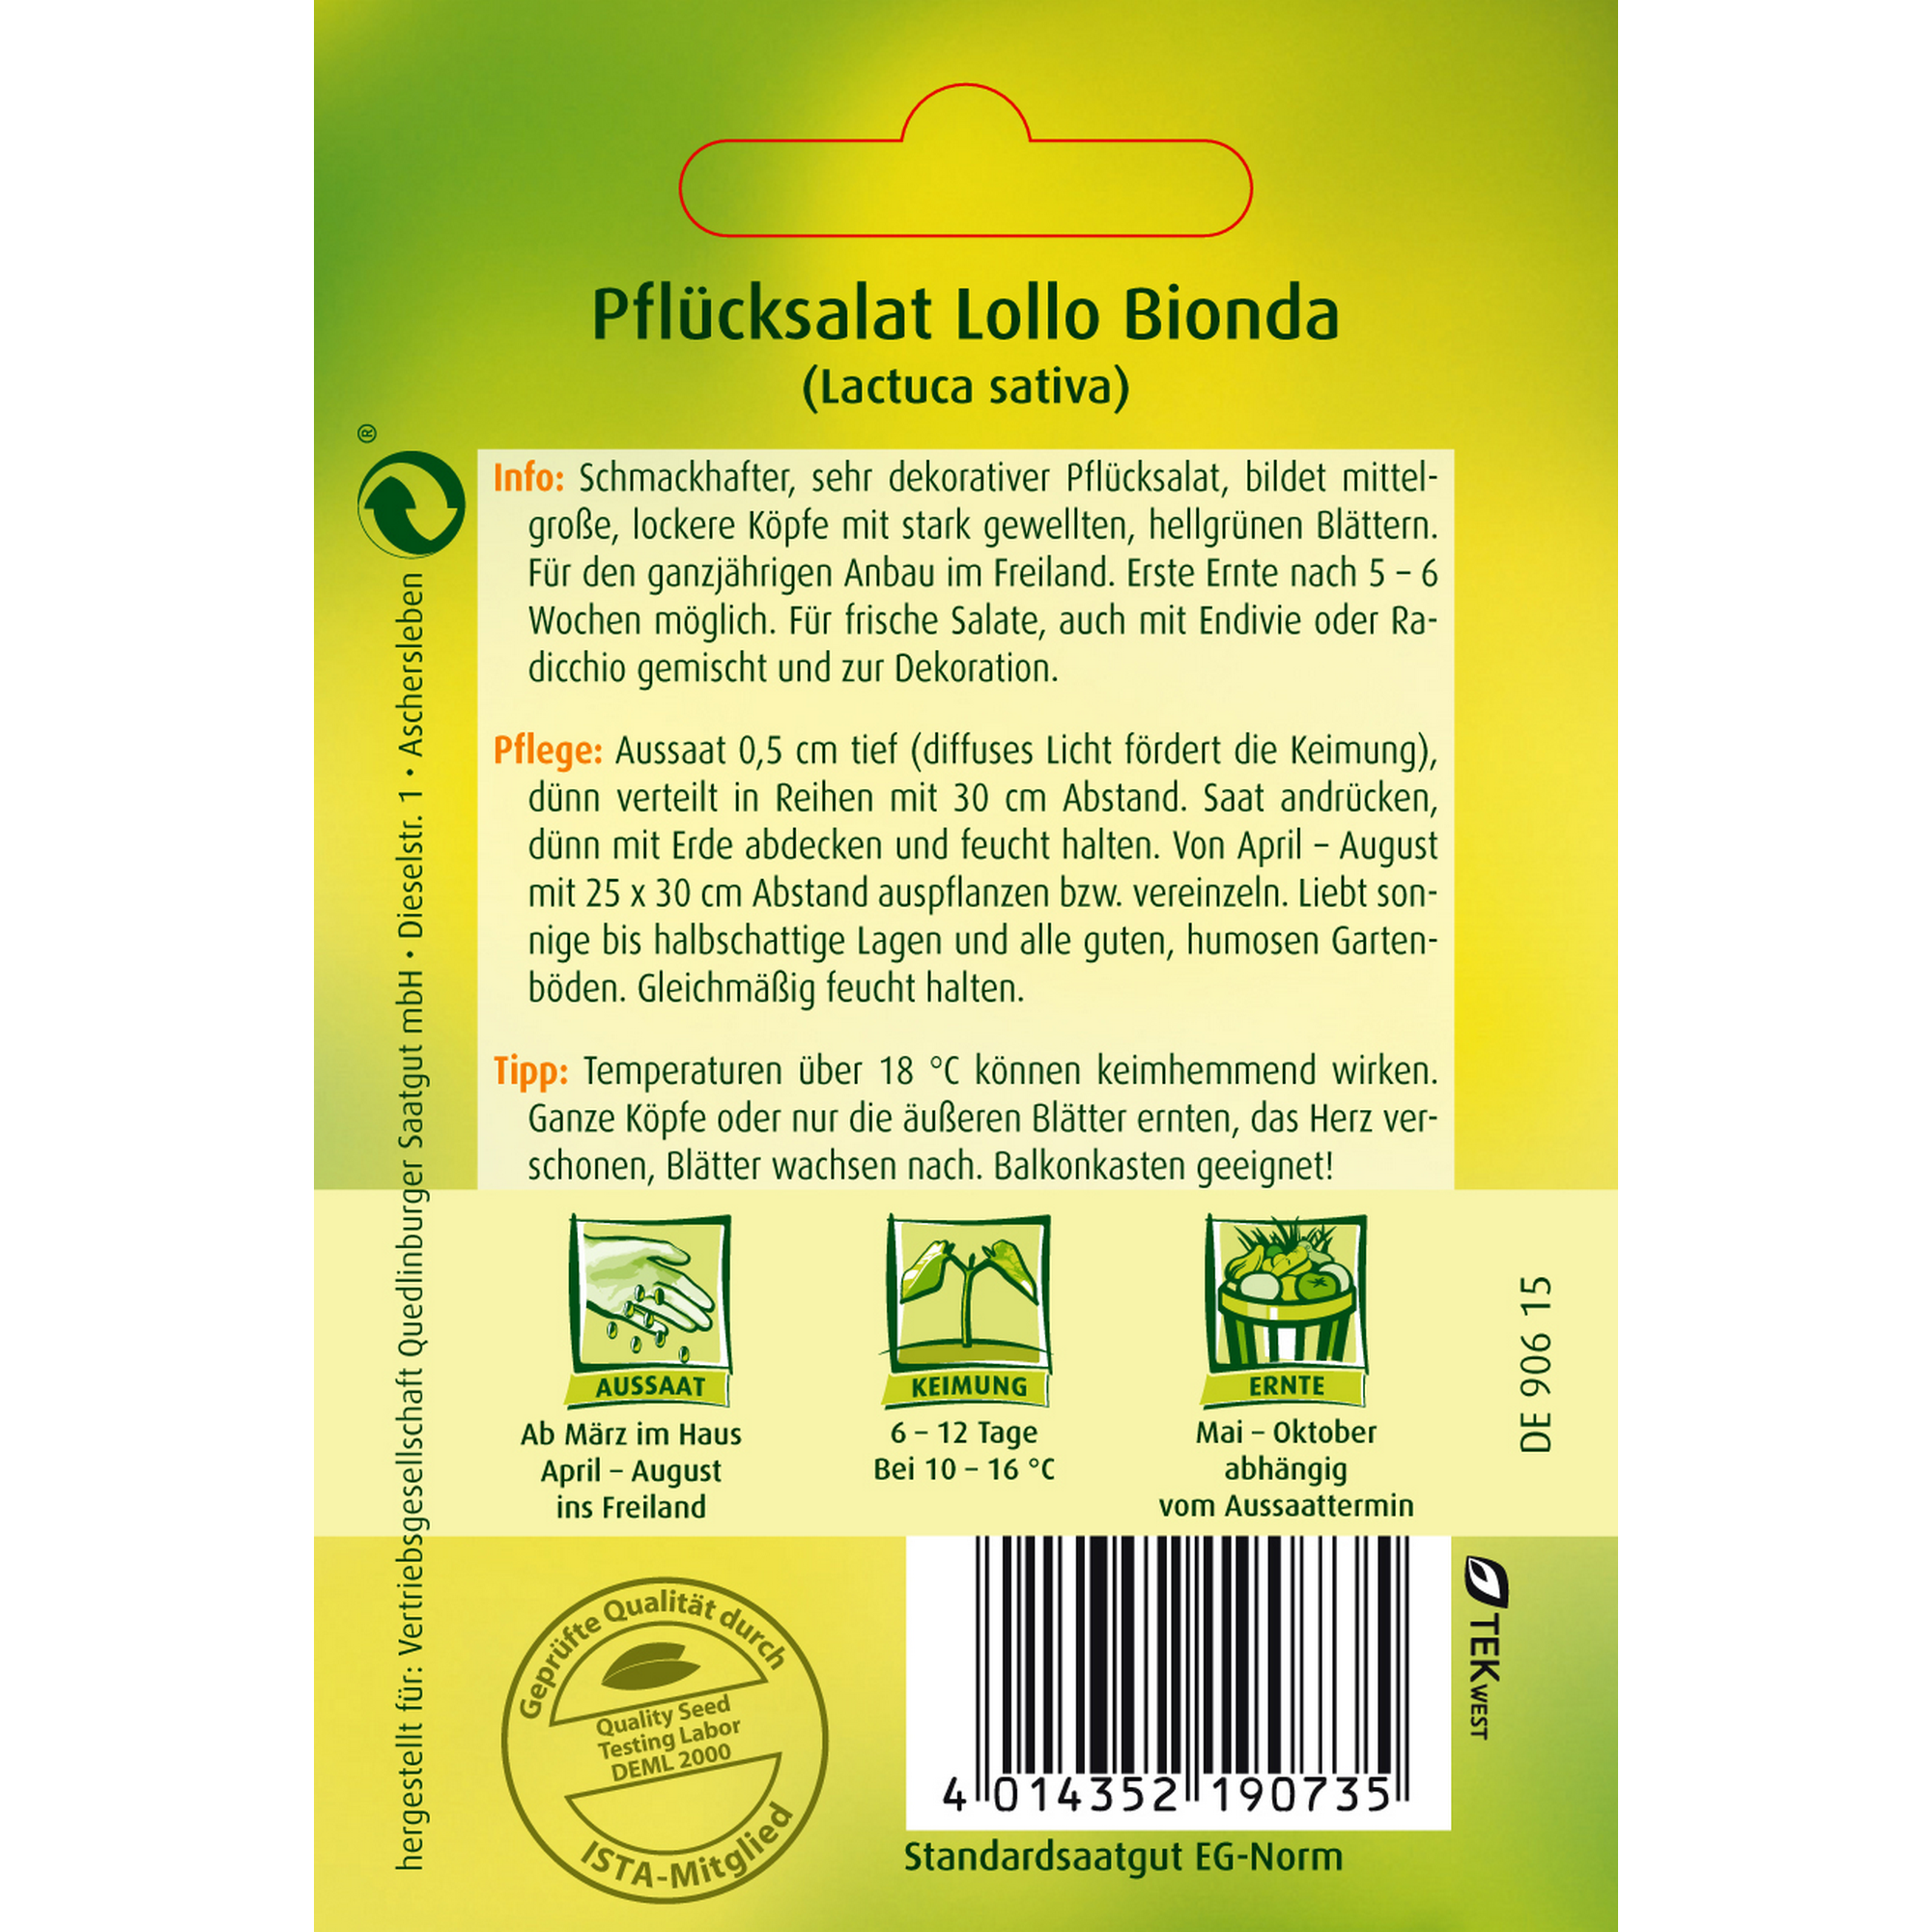 Pfluecksalat 'Lollo bionda' + product picture